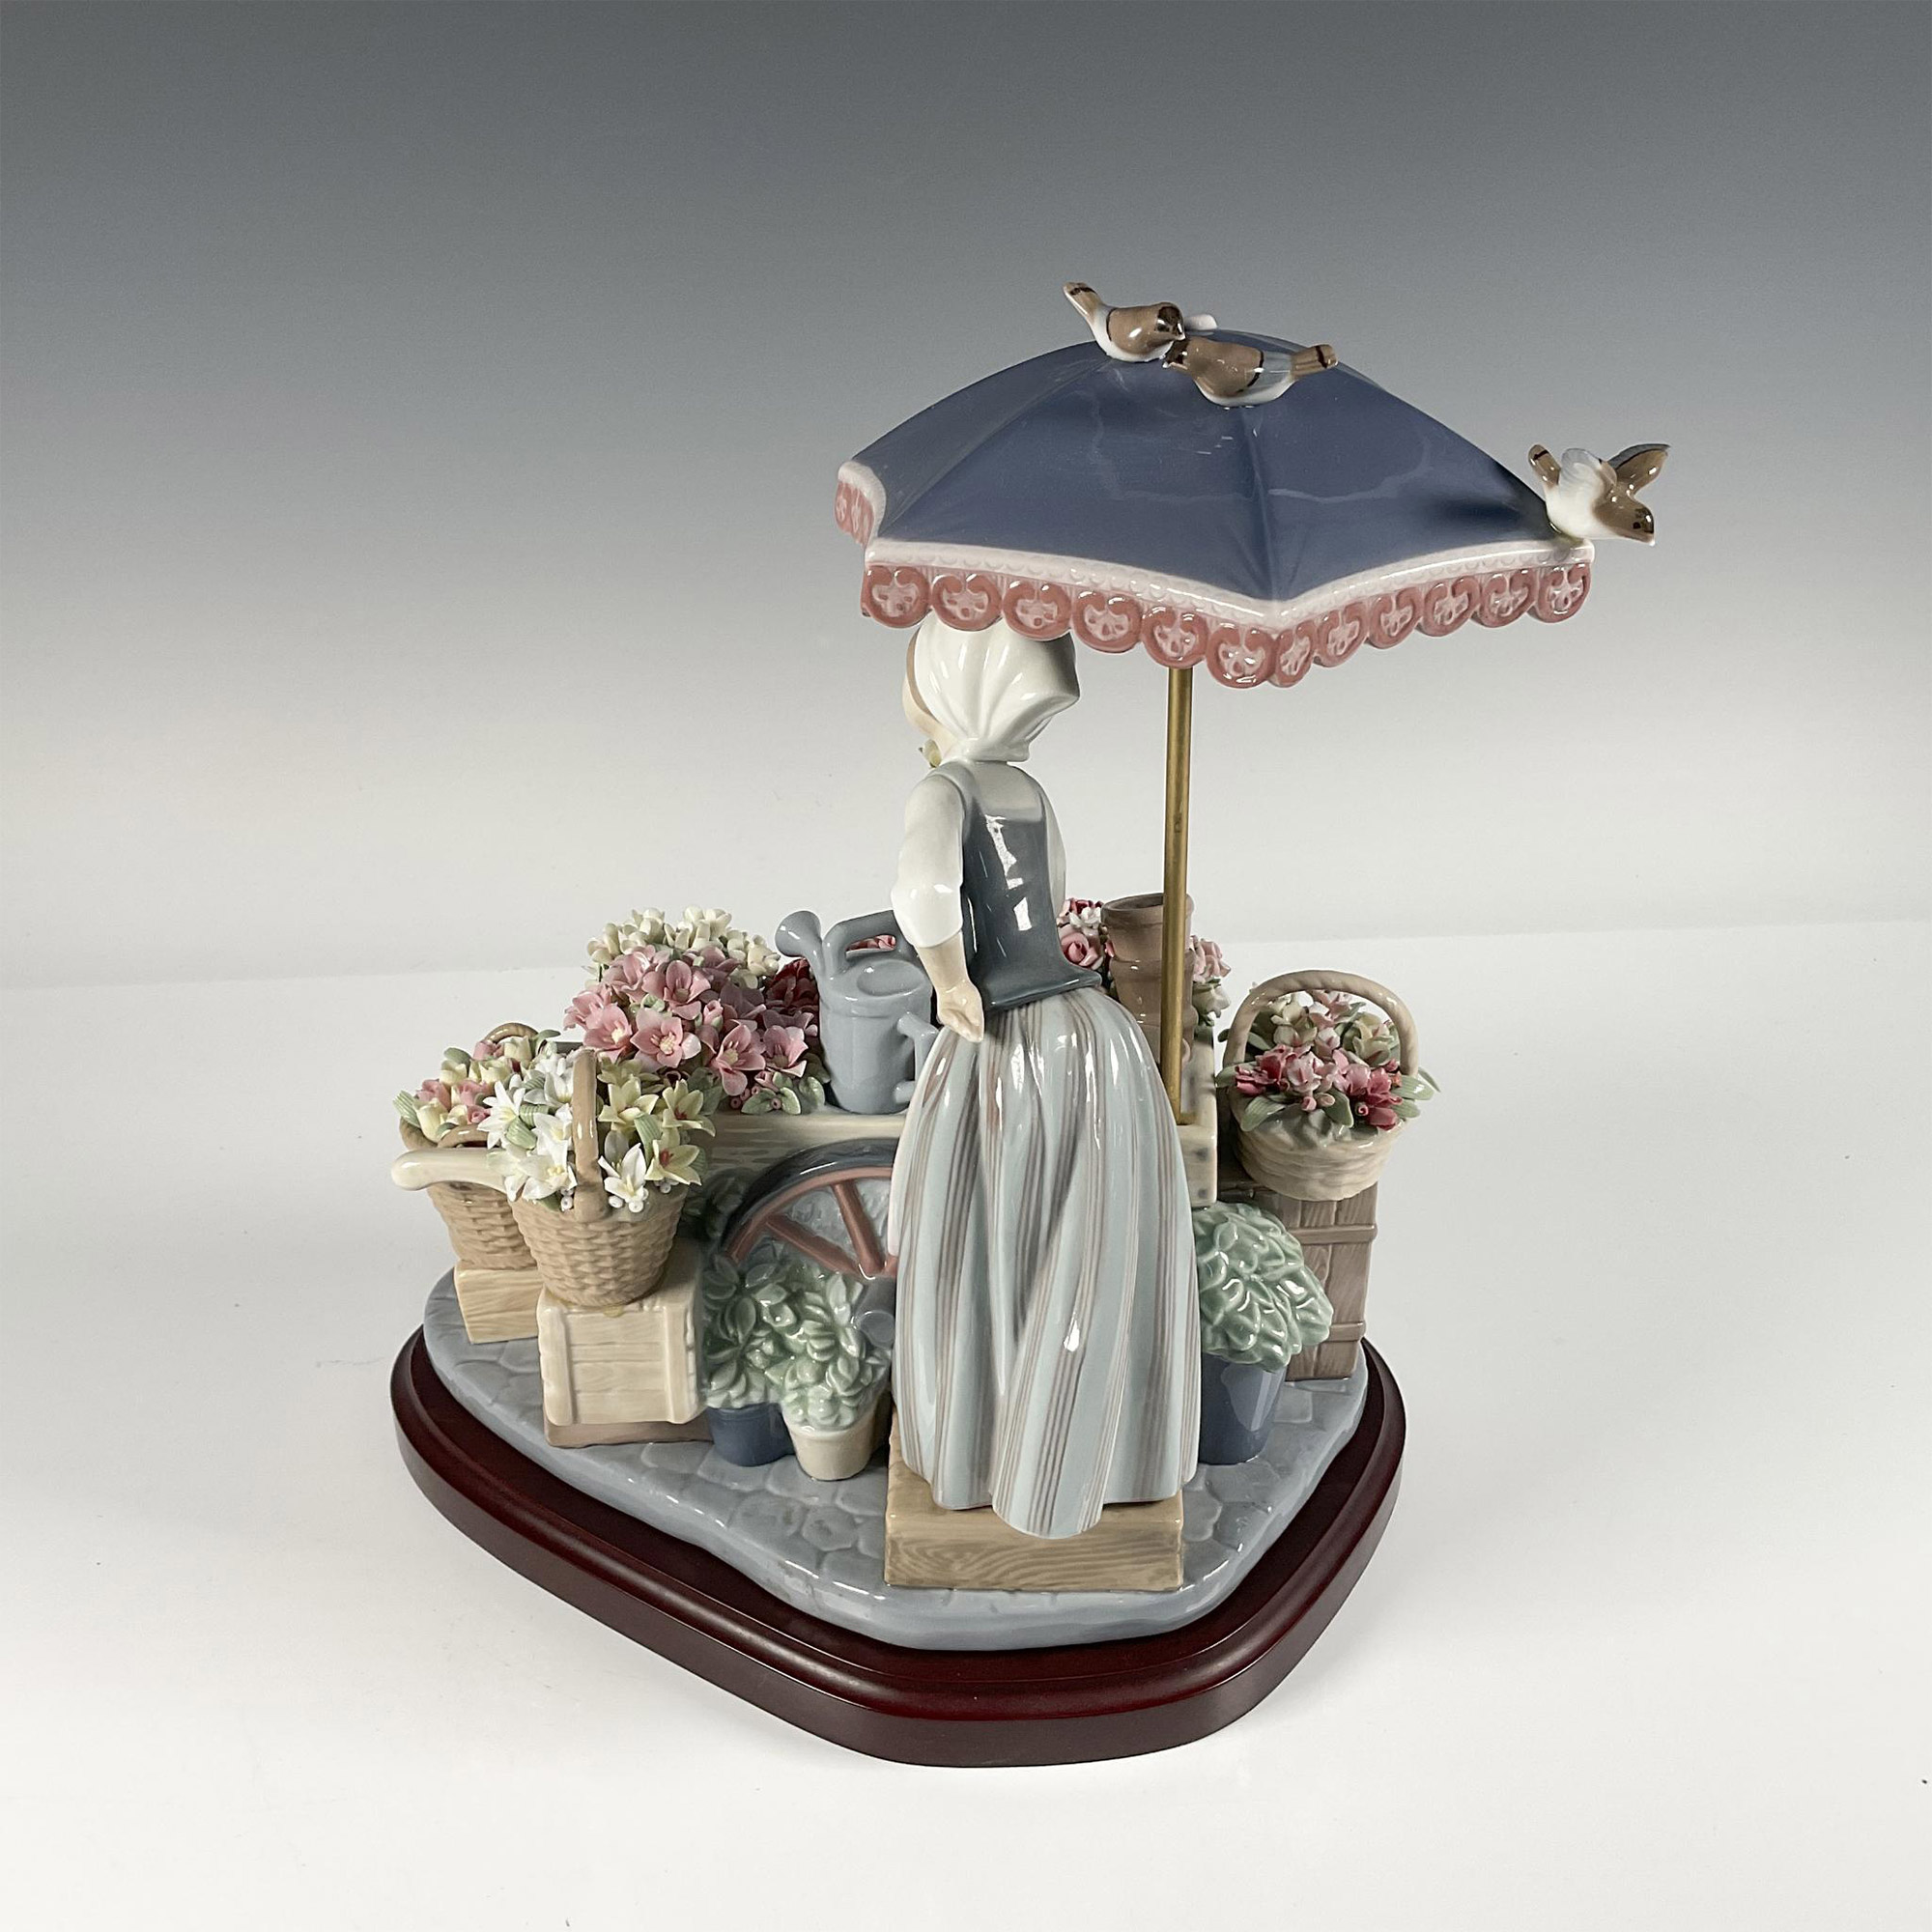 Flowers of the Season 1001454 - Lladro Porcelain Figurine - Image 2 of 3